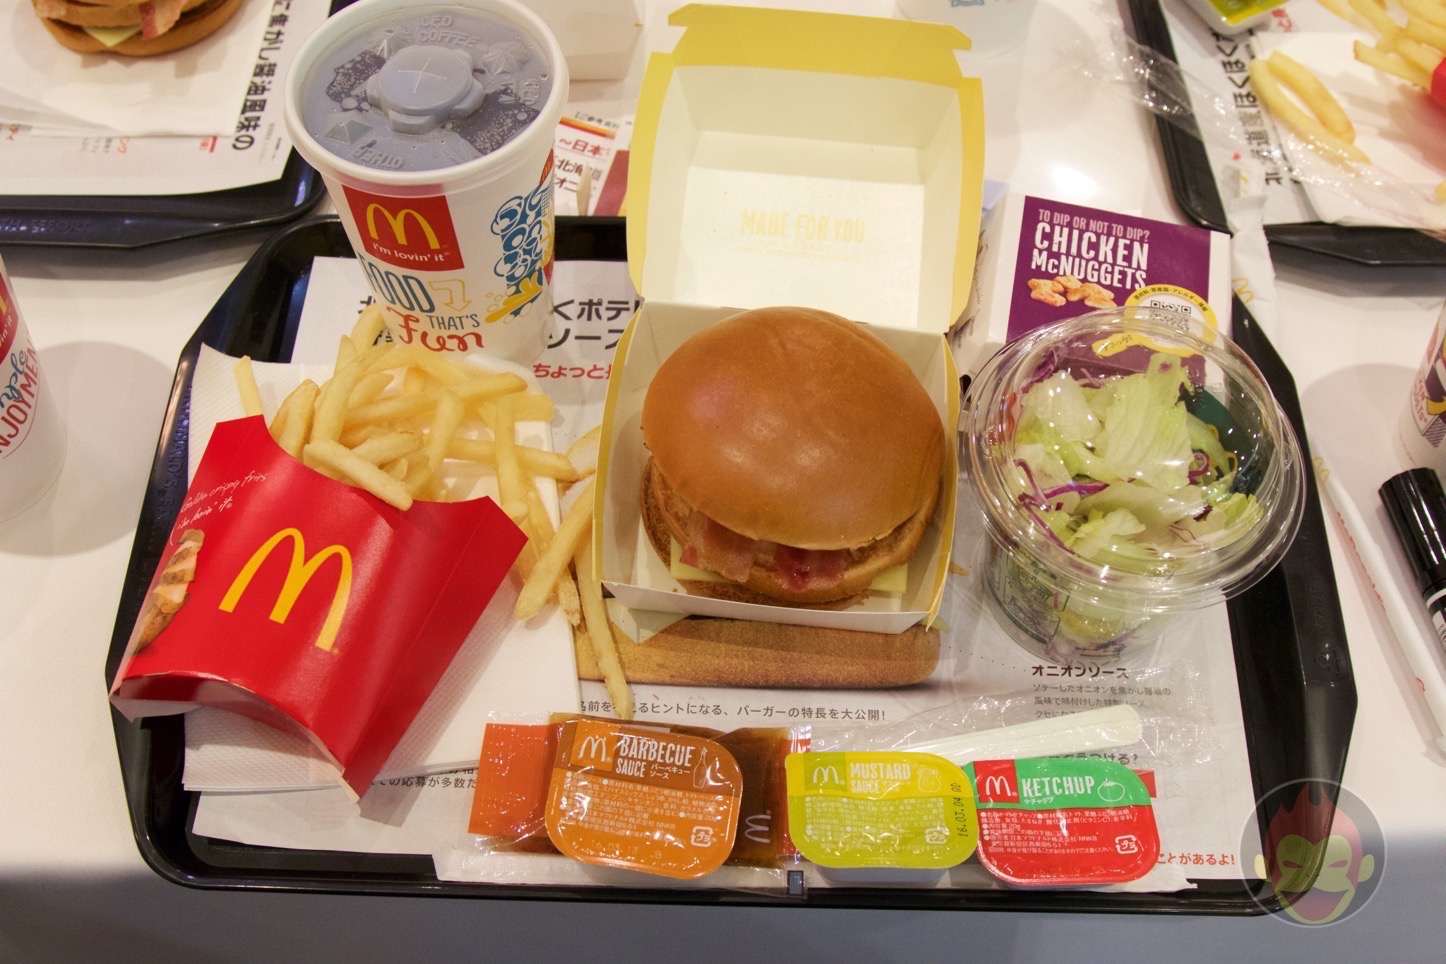 McDonalds-New-Burger-With-No-Name-10.jpg